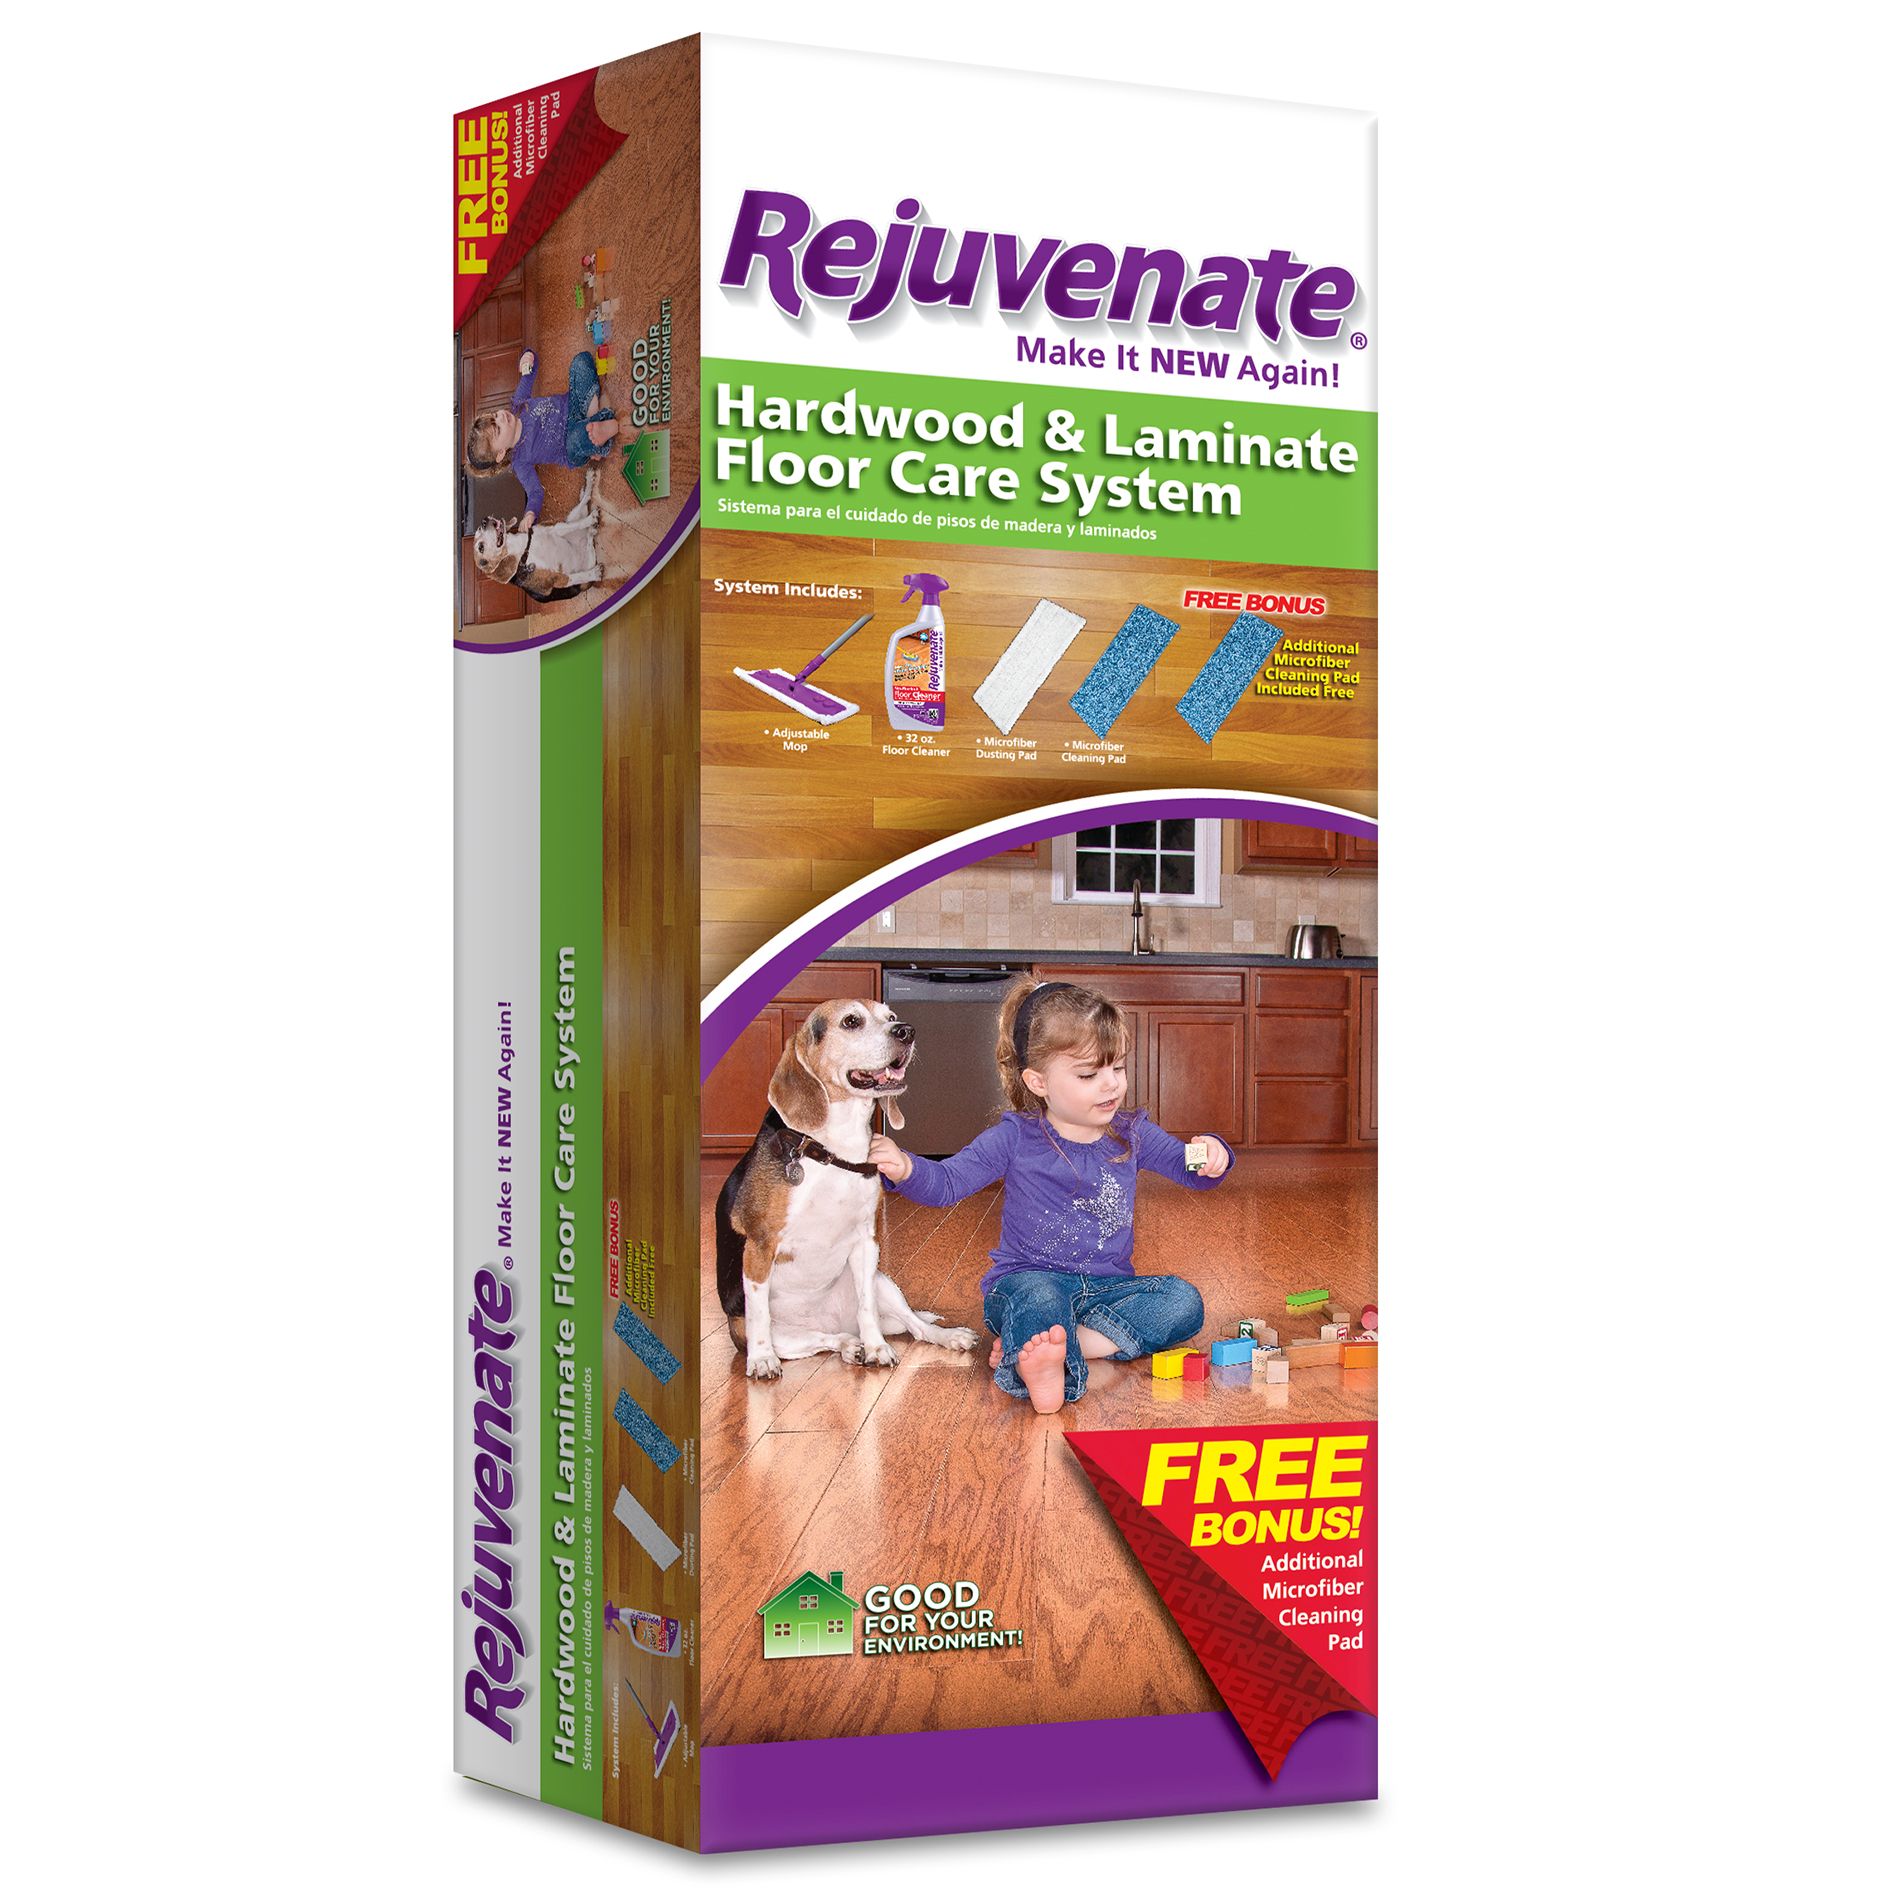 Rejuvenate Hardwood & Laminate Floor Care System